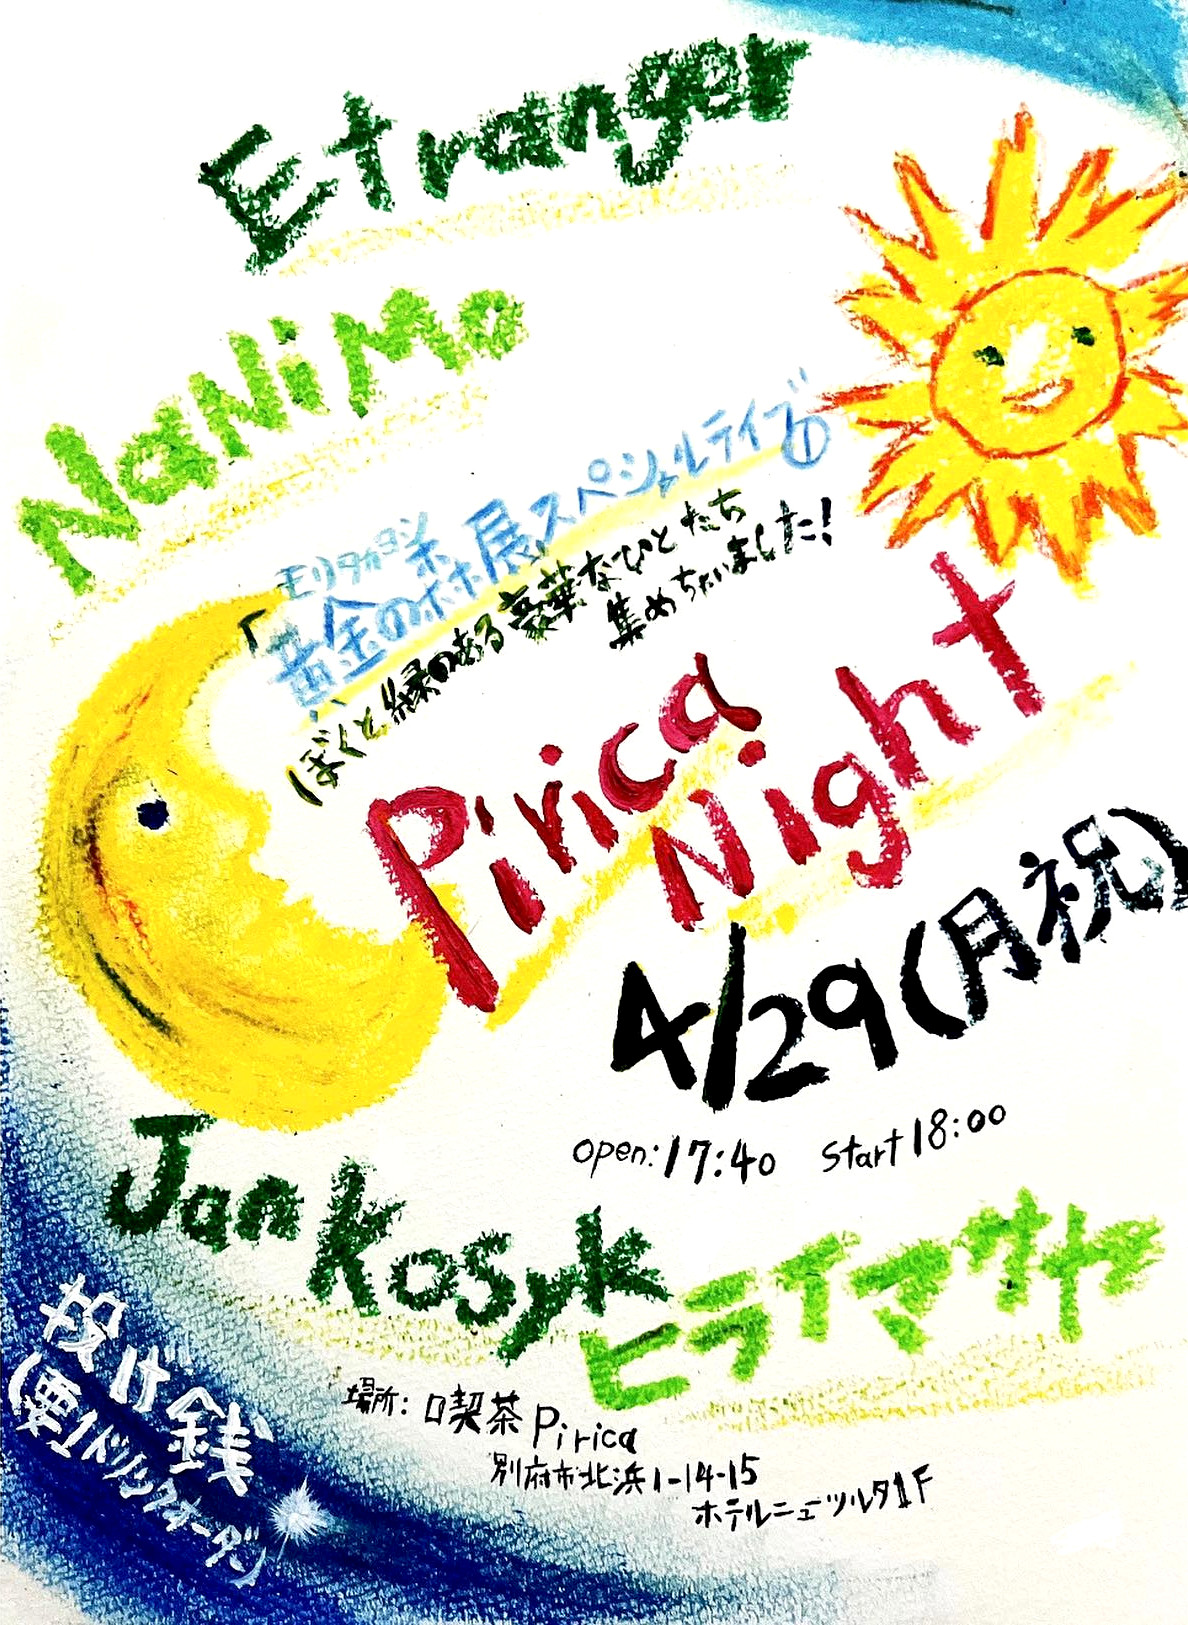 Exhibition "Pirica Night" of Mori Tacayoshi at Café Pirica on April 29 2024 at 17:40 with live music.